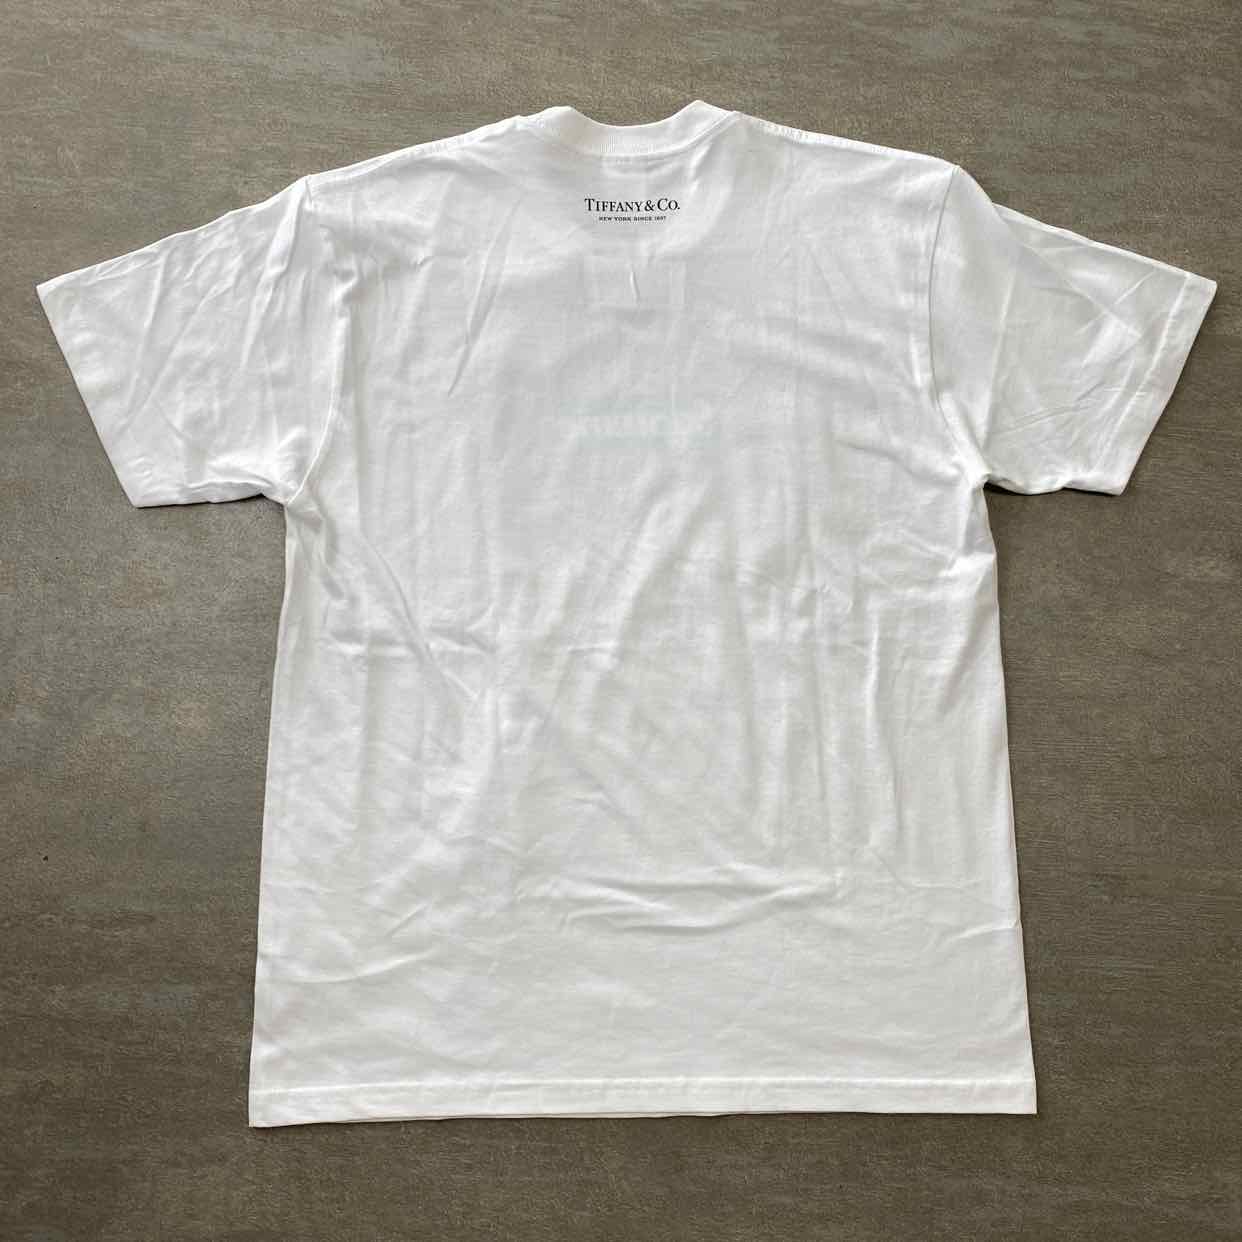 Supreme T-Shirt &quot;TIFFANY BOX LOGO&quot; White New Size M